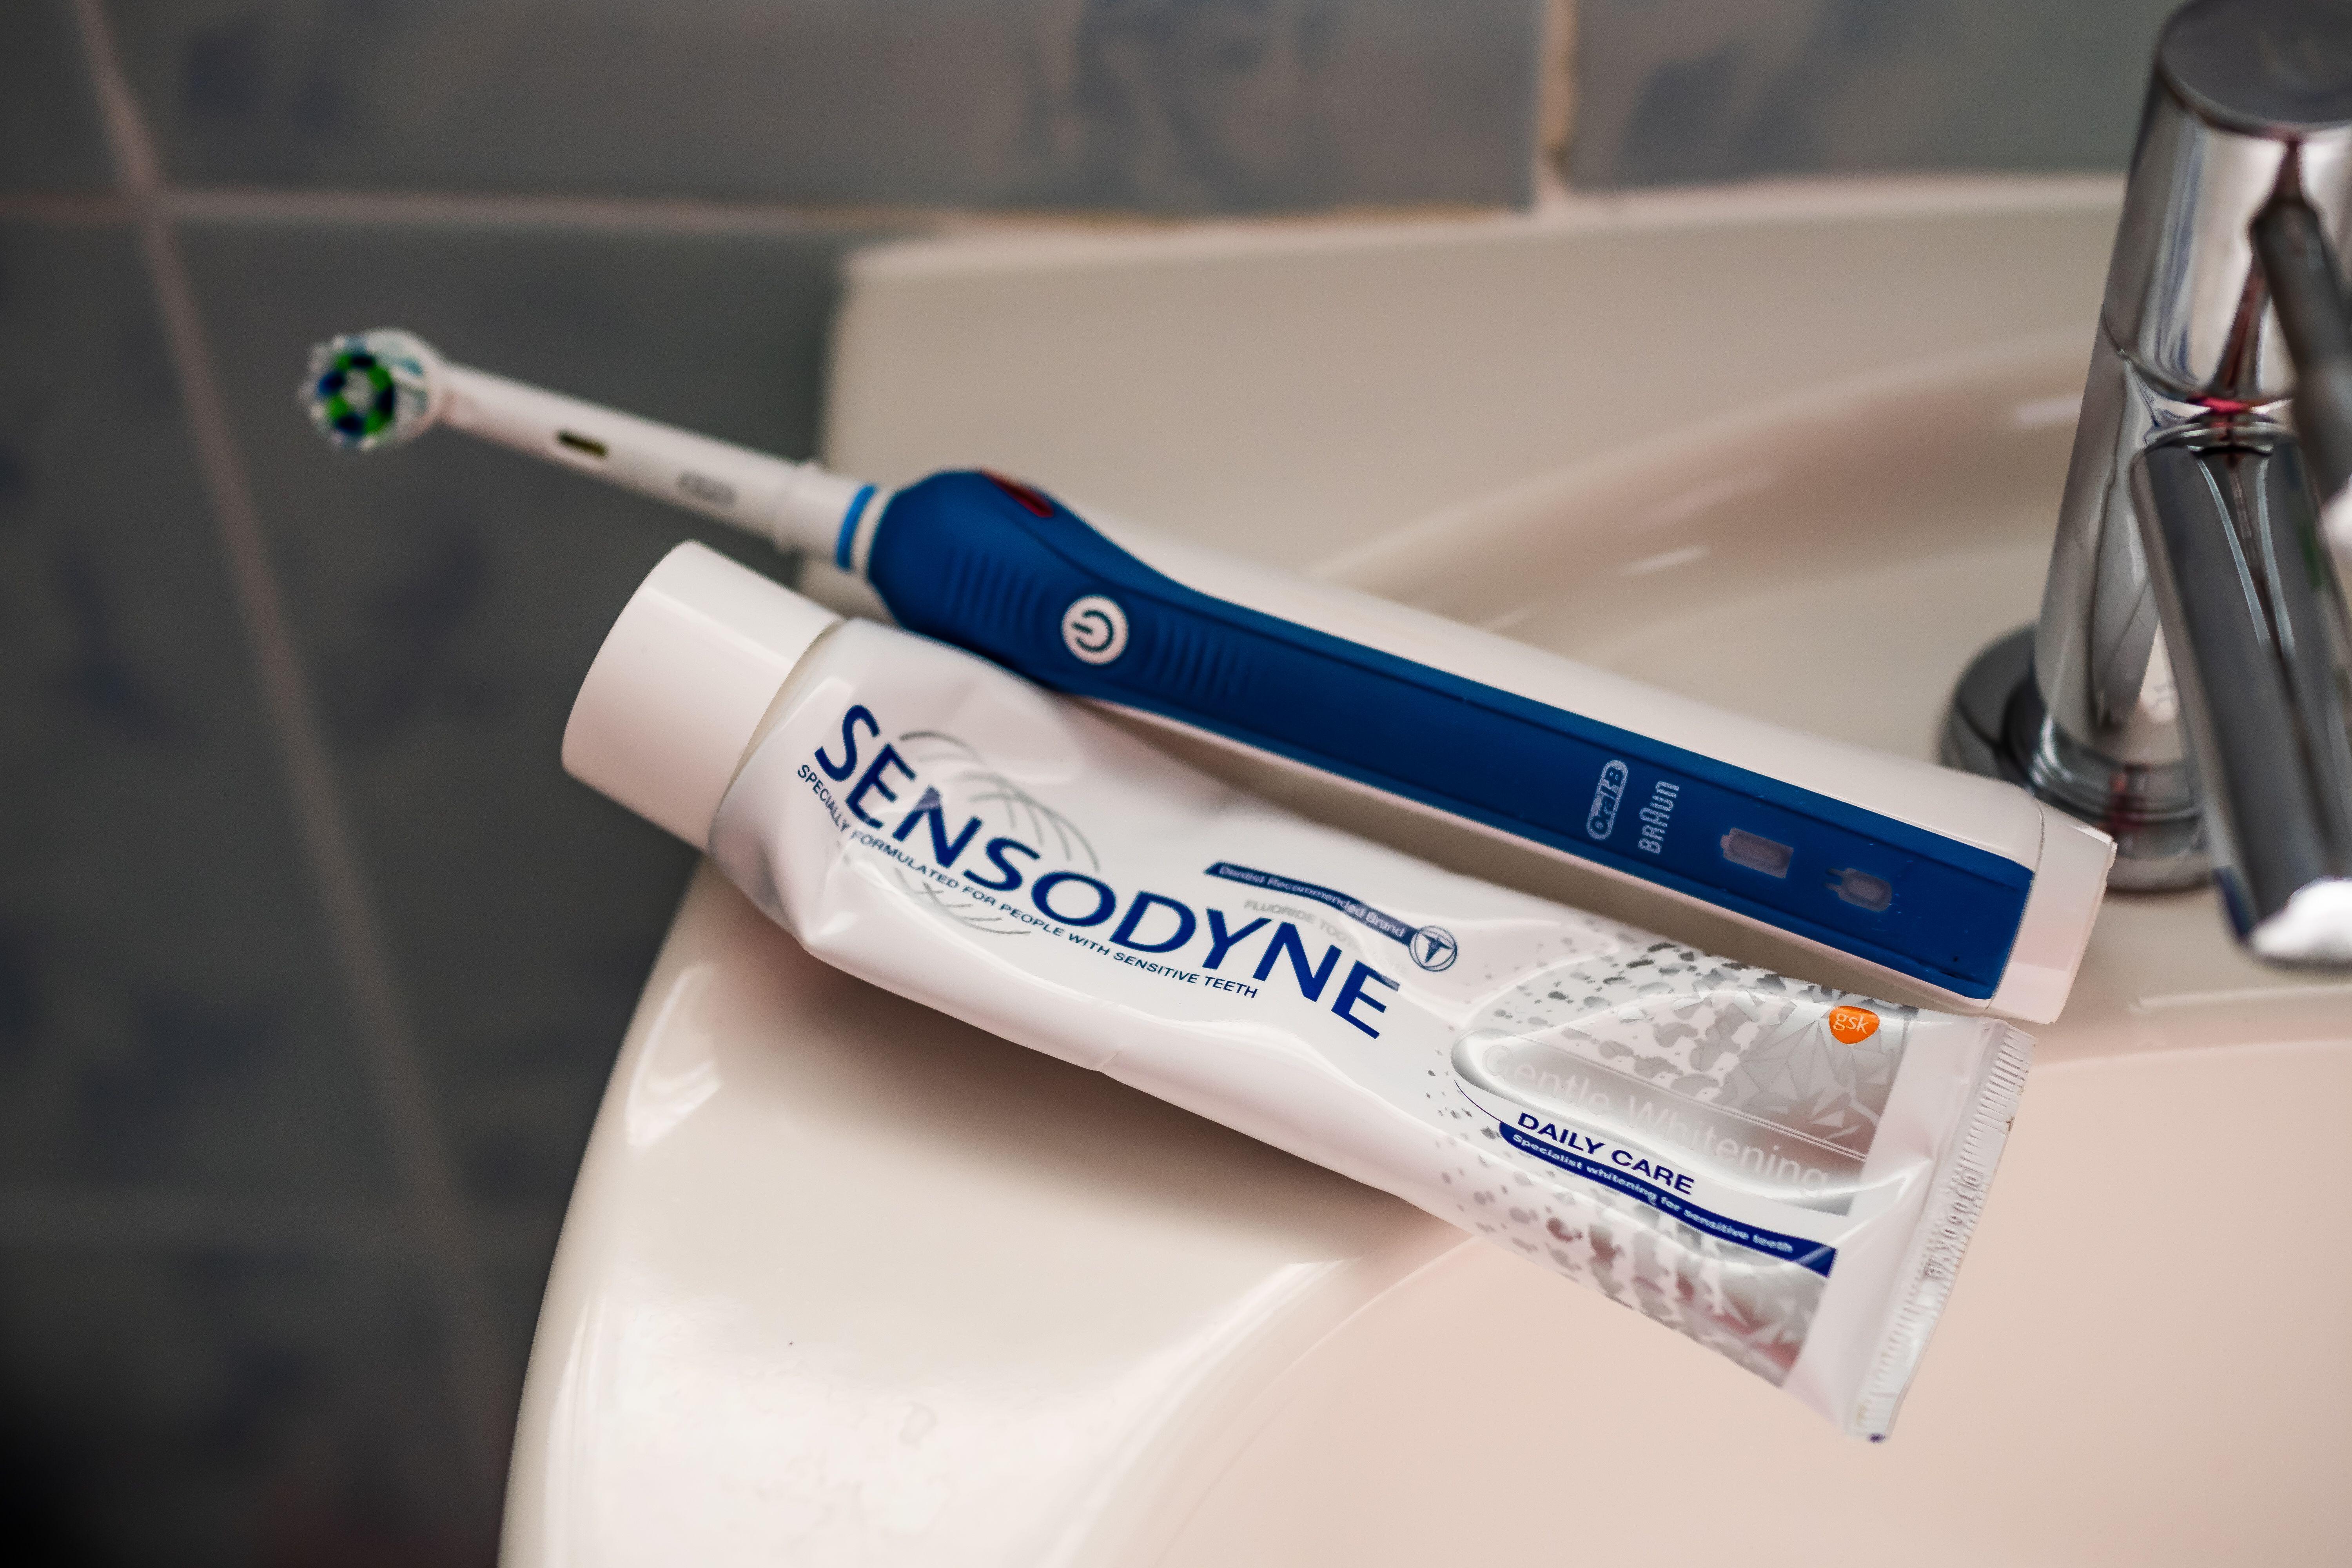 Haleon makes Sensodyne toothpaste 